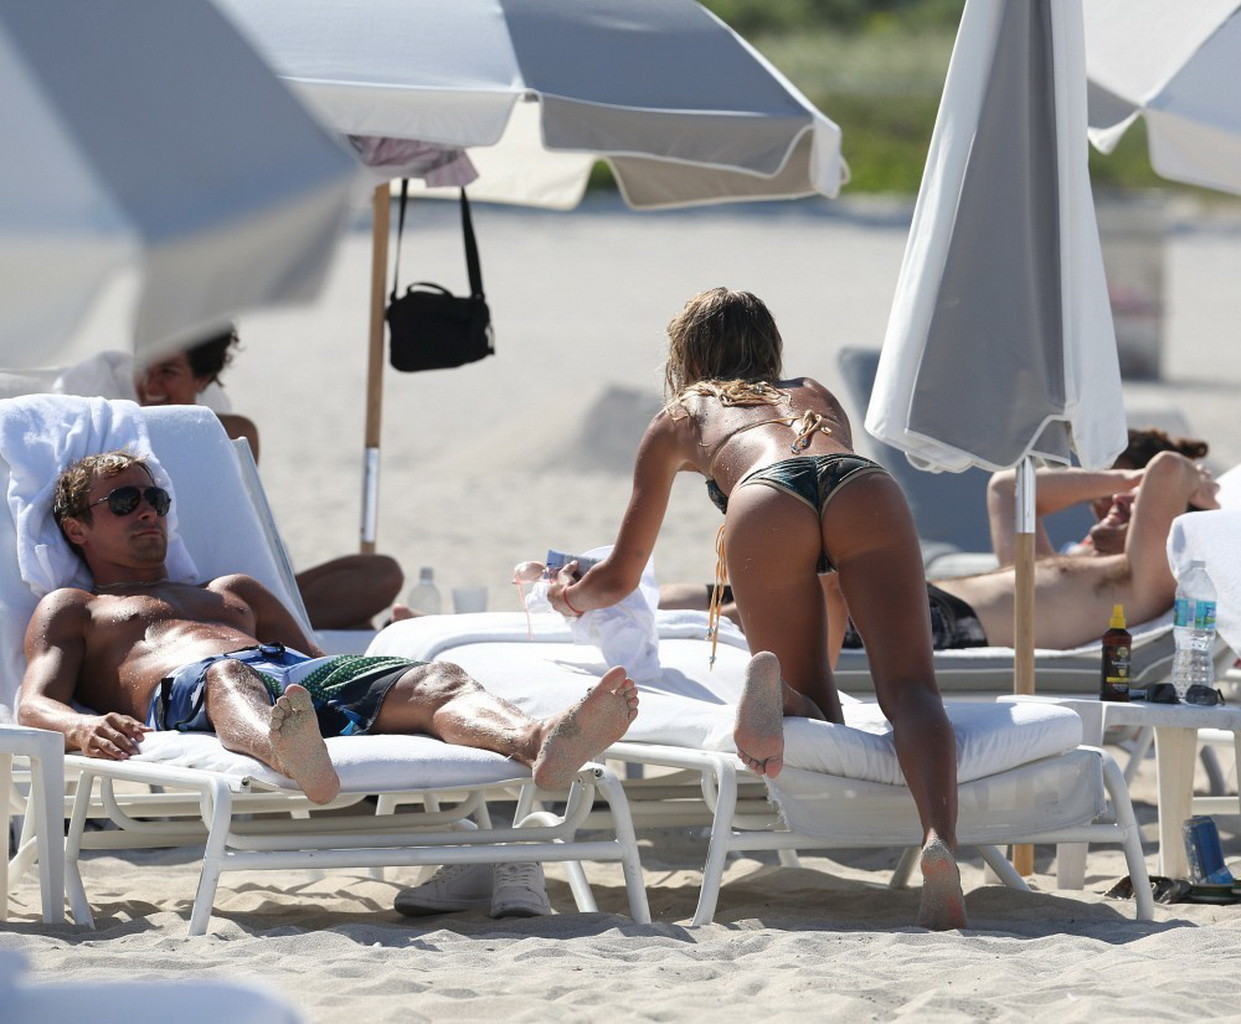 Petra benova zeigt ihren Bikini-Body am Strand in Miami
 #75231899